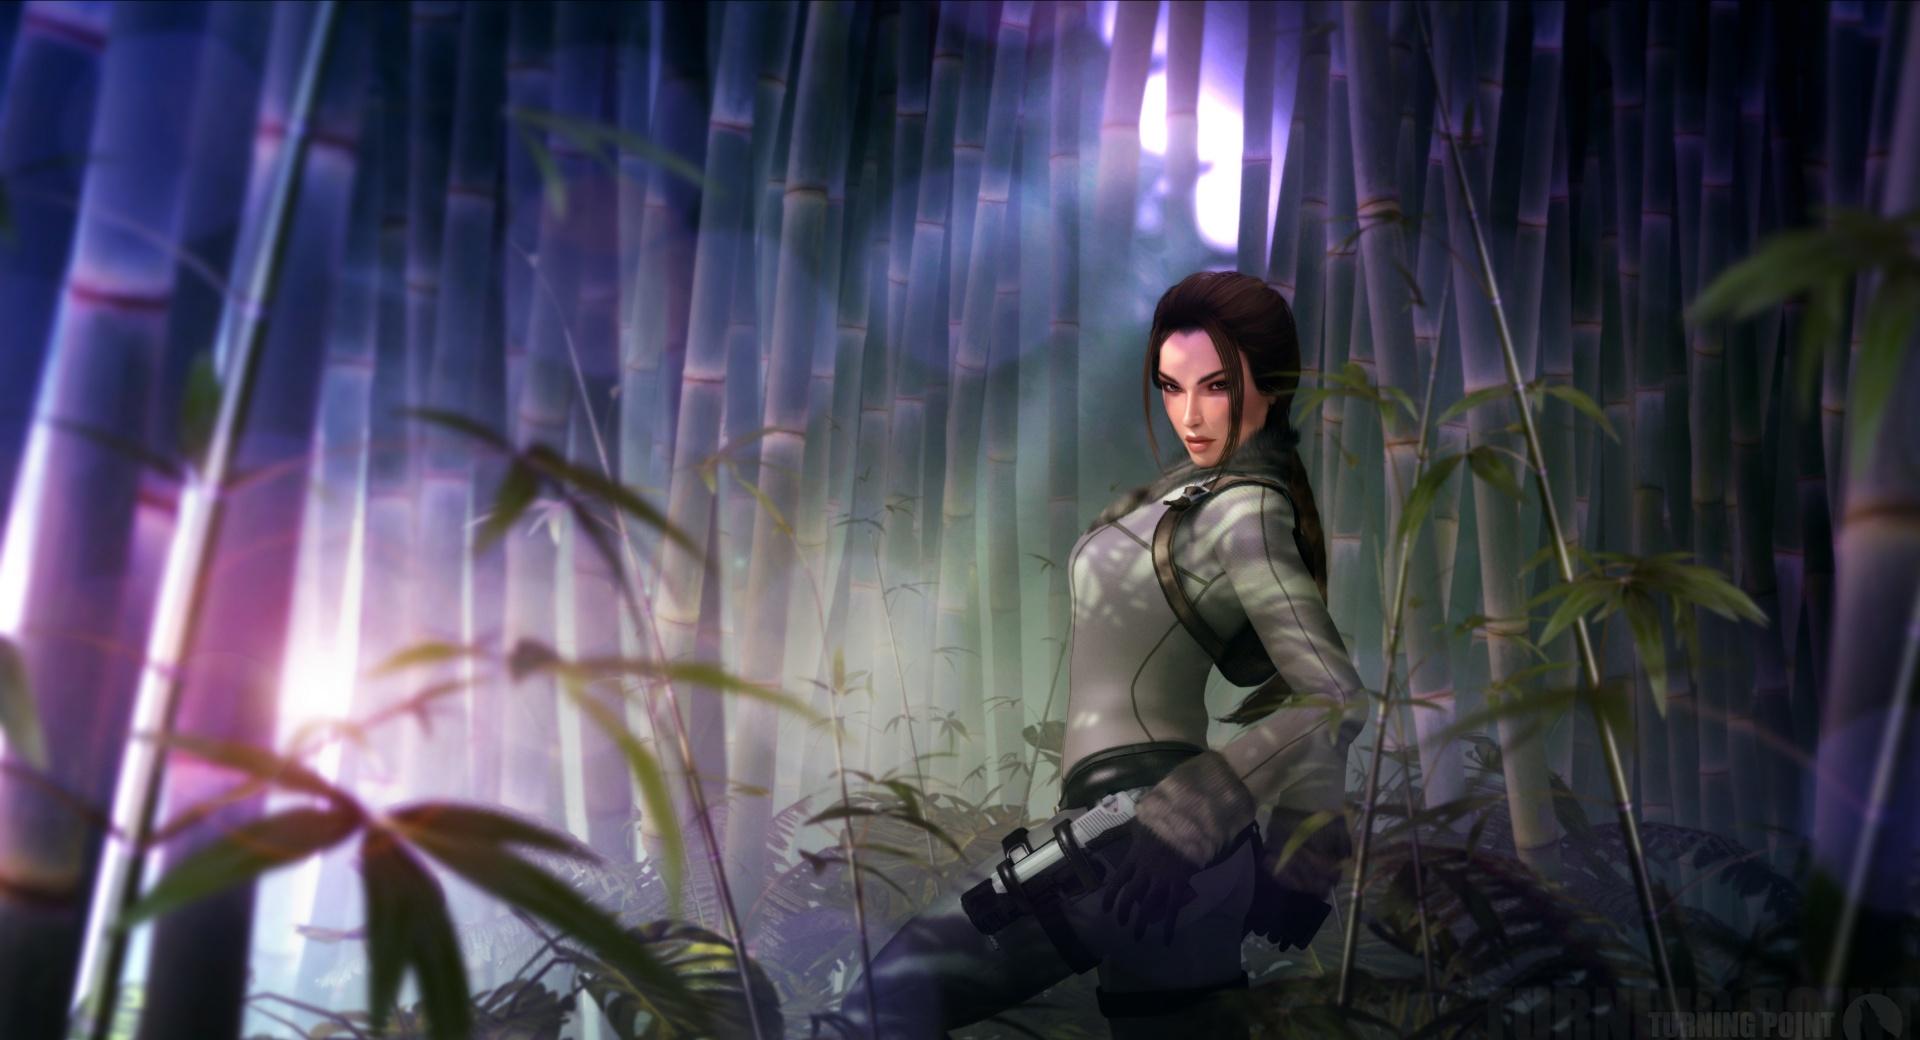 Lara Croft FanArt at 320 x 480 iPhone size wallpapers HD quality